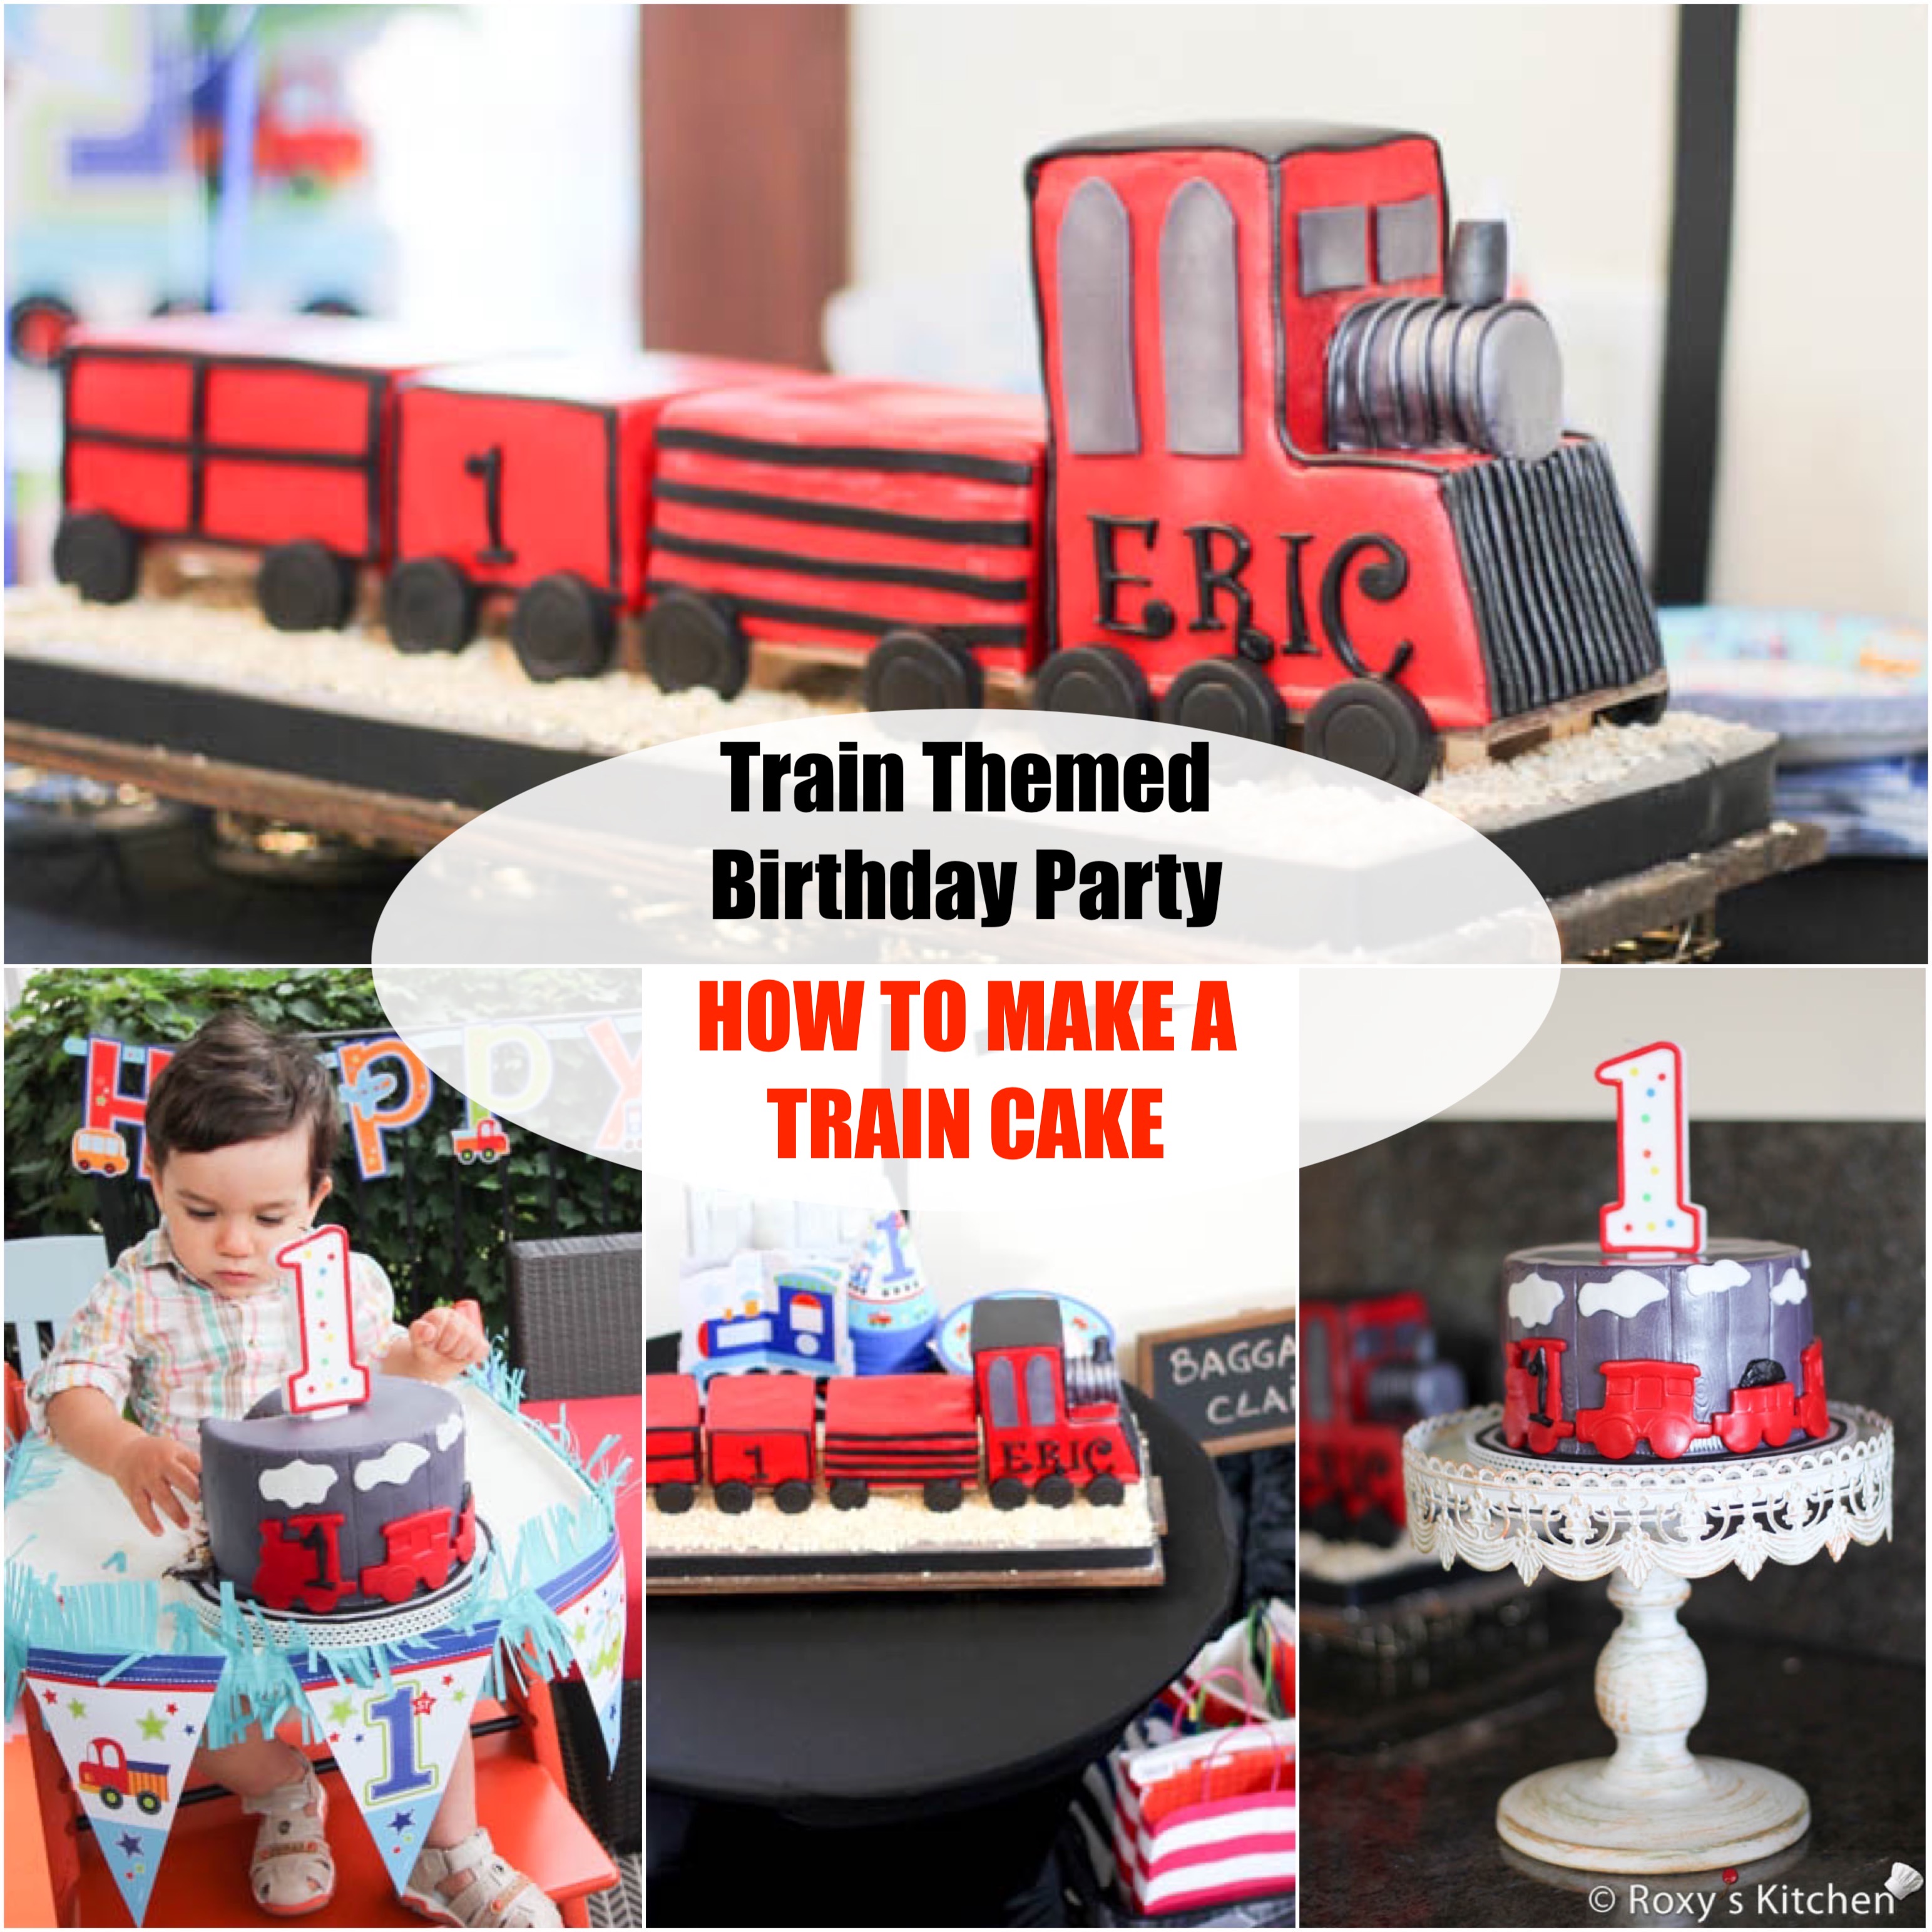 Train Themed Birthday Party - Train Cake